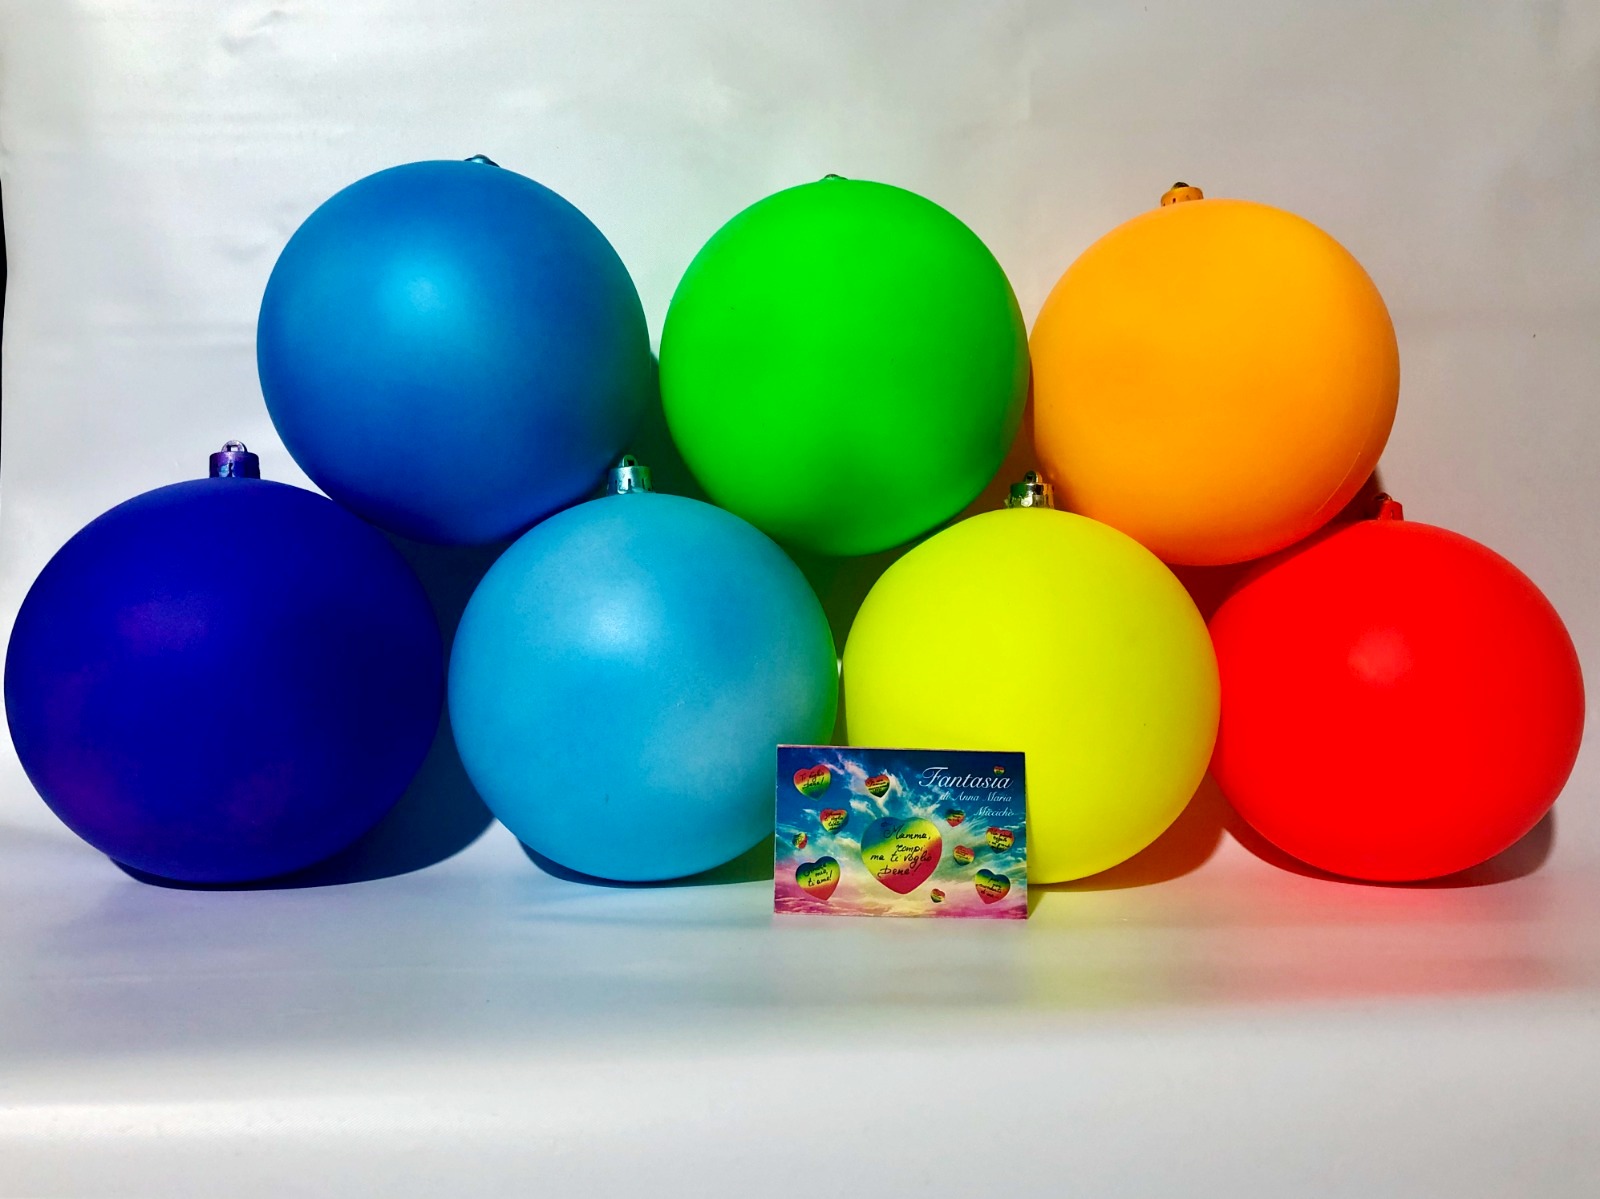 2019 Insieme palle colorate  - offerta minima 70 euro -